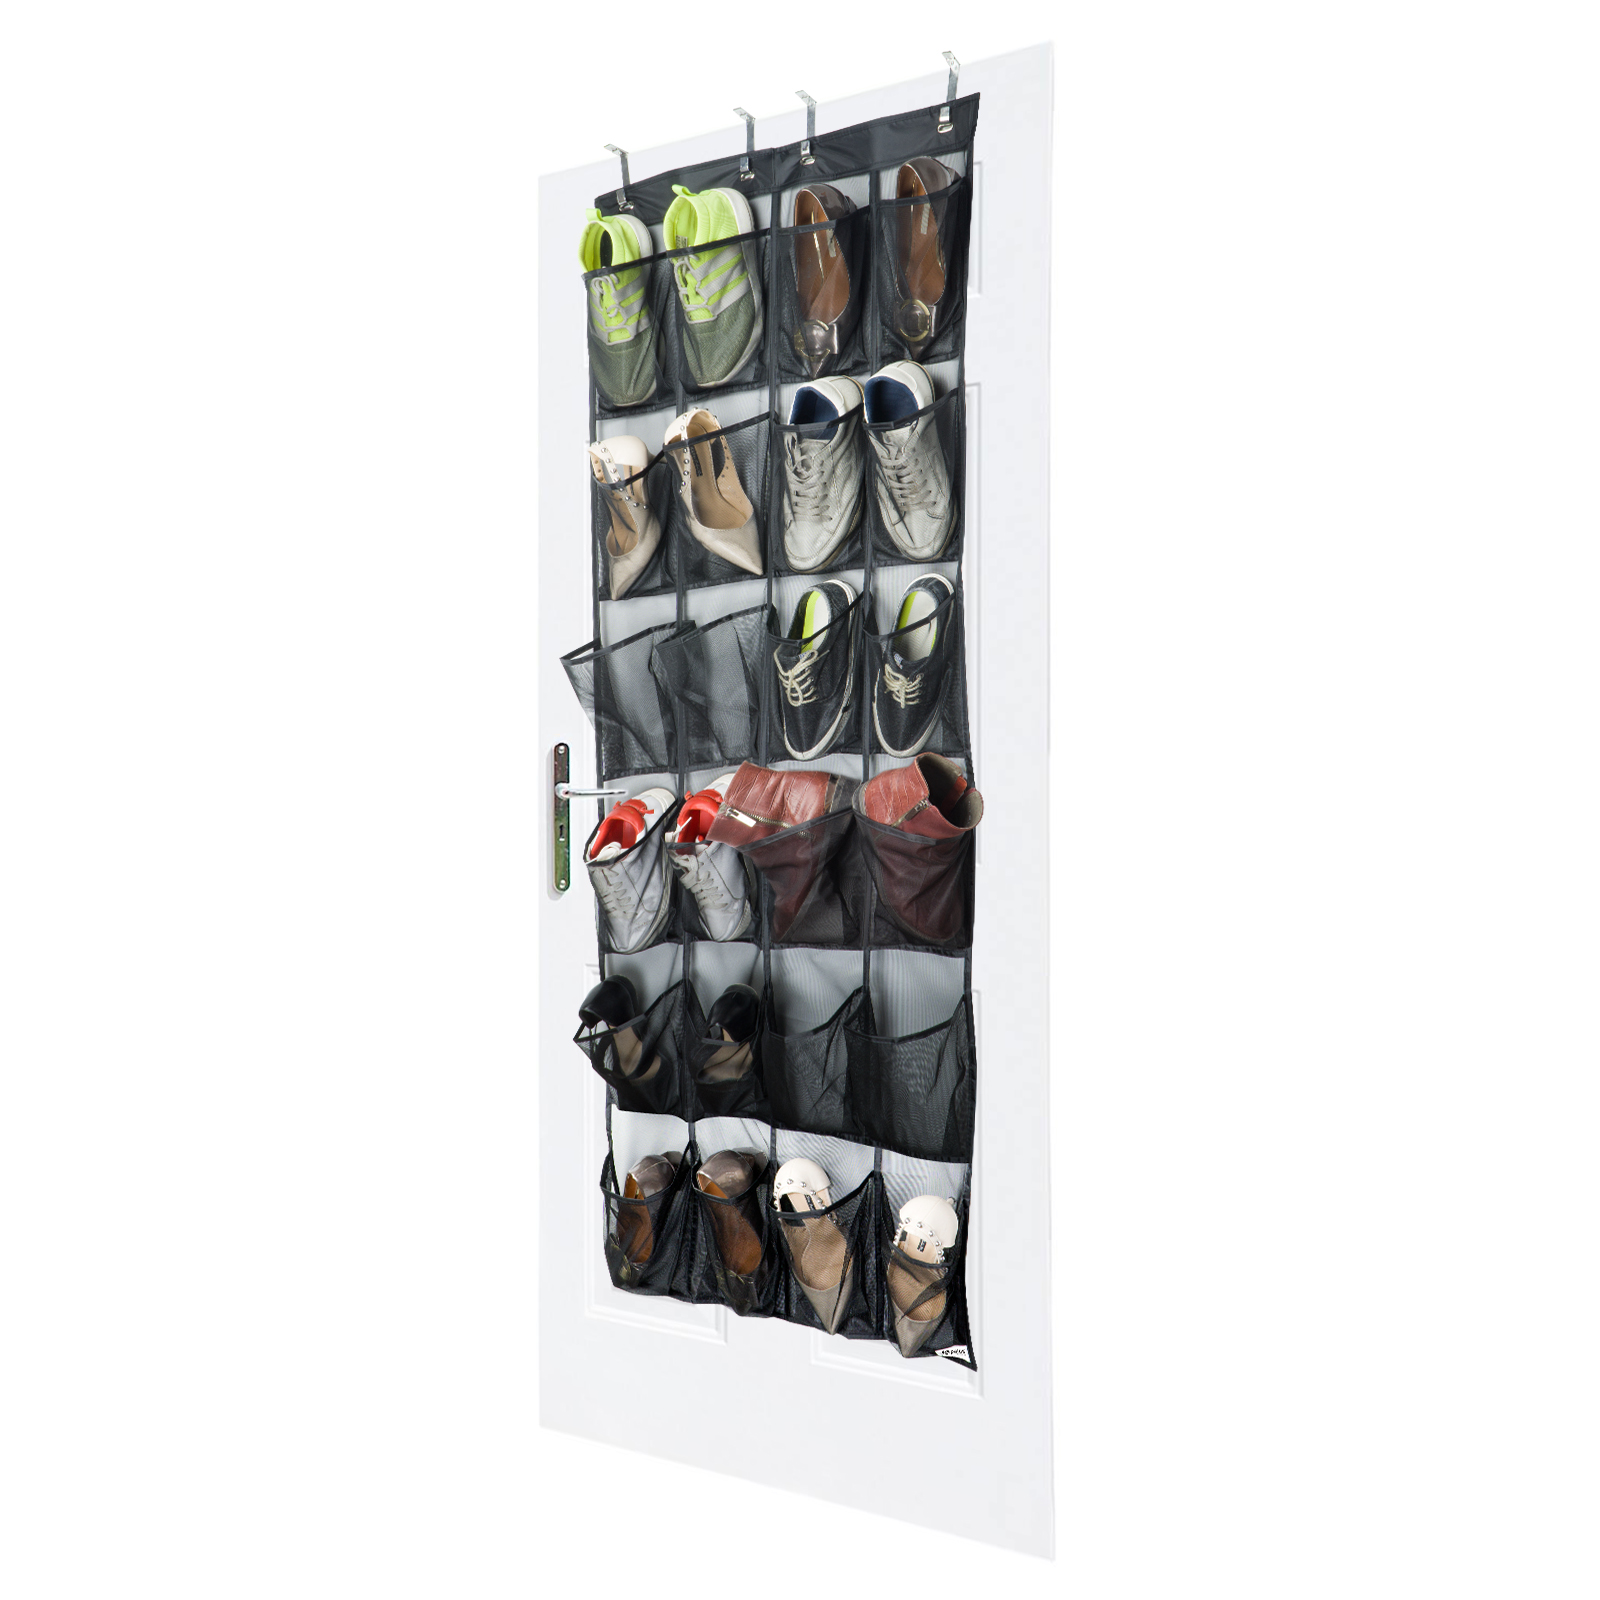 Apalus Over the Door Shoe Organizer, Door-mounted storage, Sneakers, Sandals Rack with Mesh Pockets for Easy storage with 4 Adjustable Door Hooks, Fits most door types/sizes (24 Pockets)